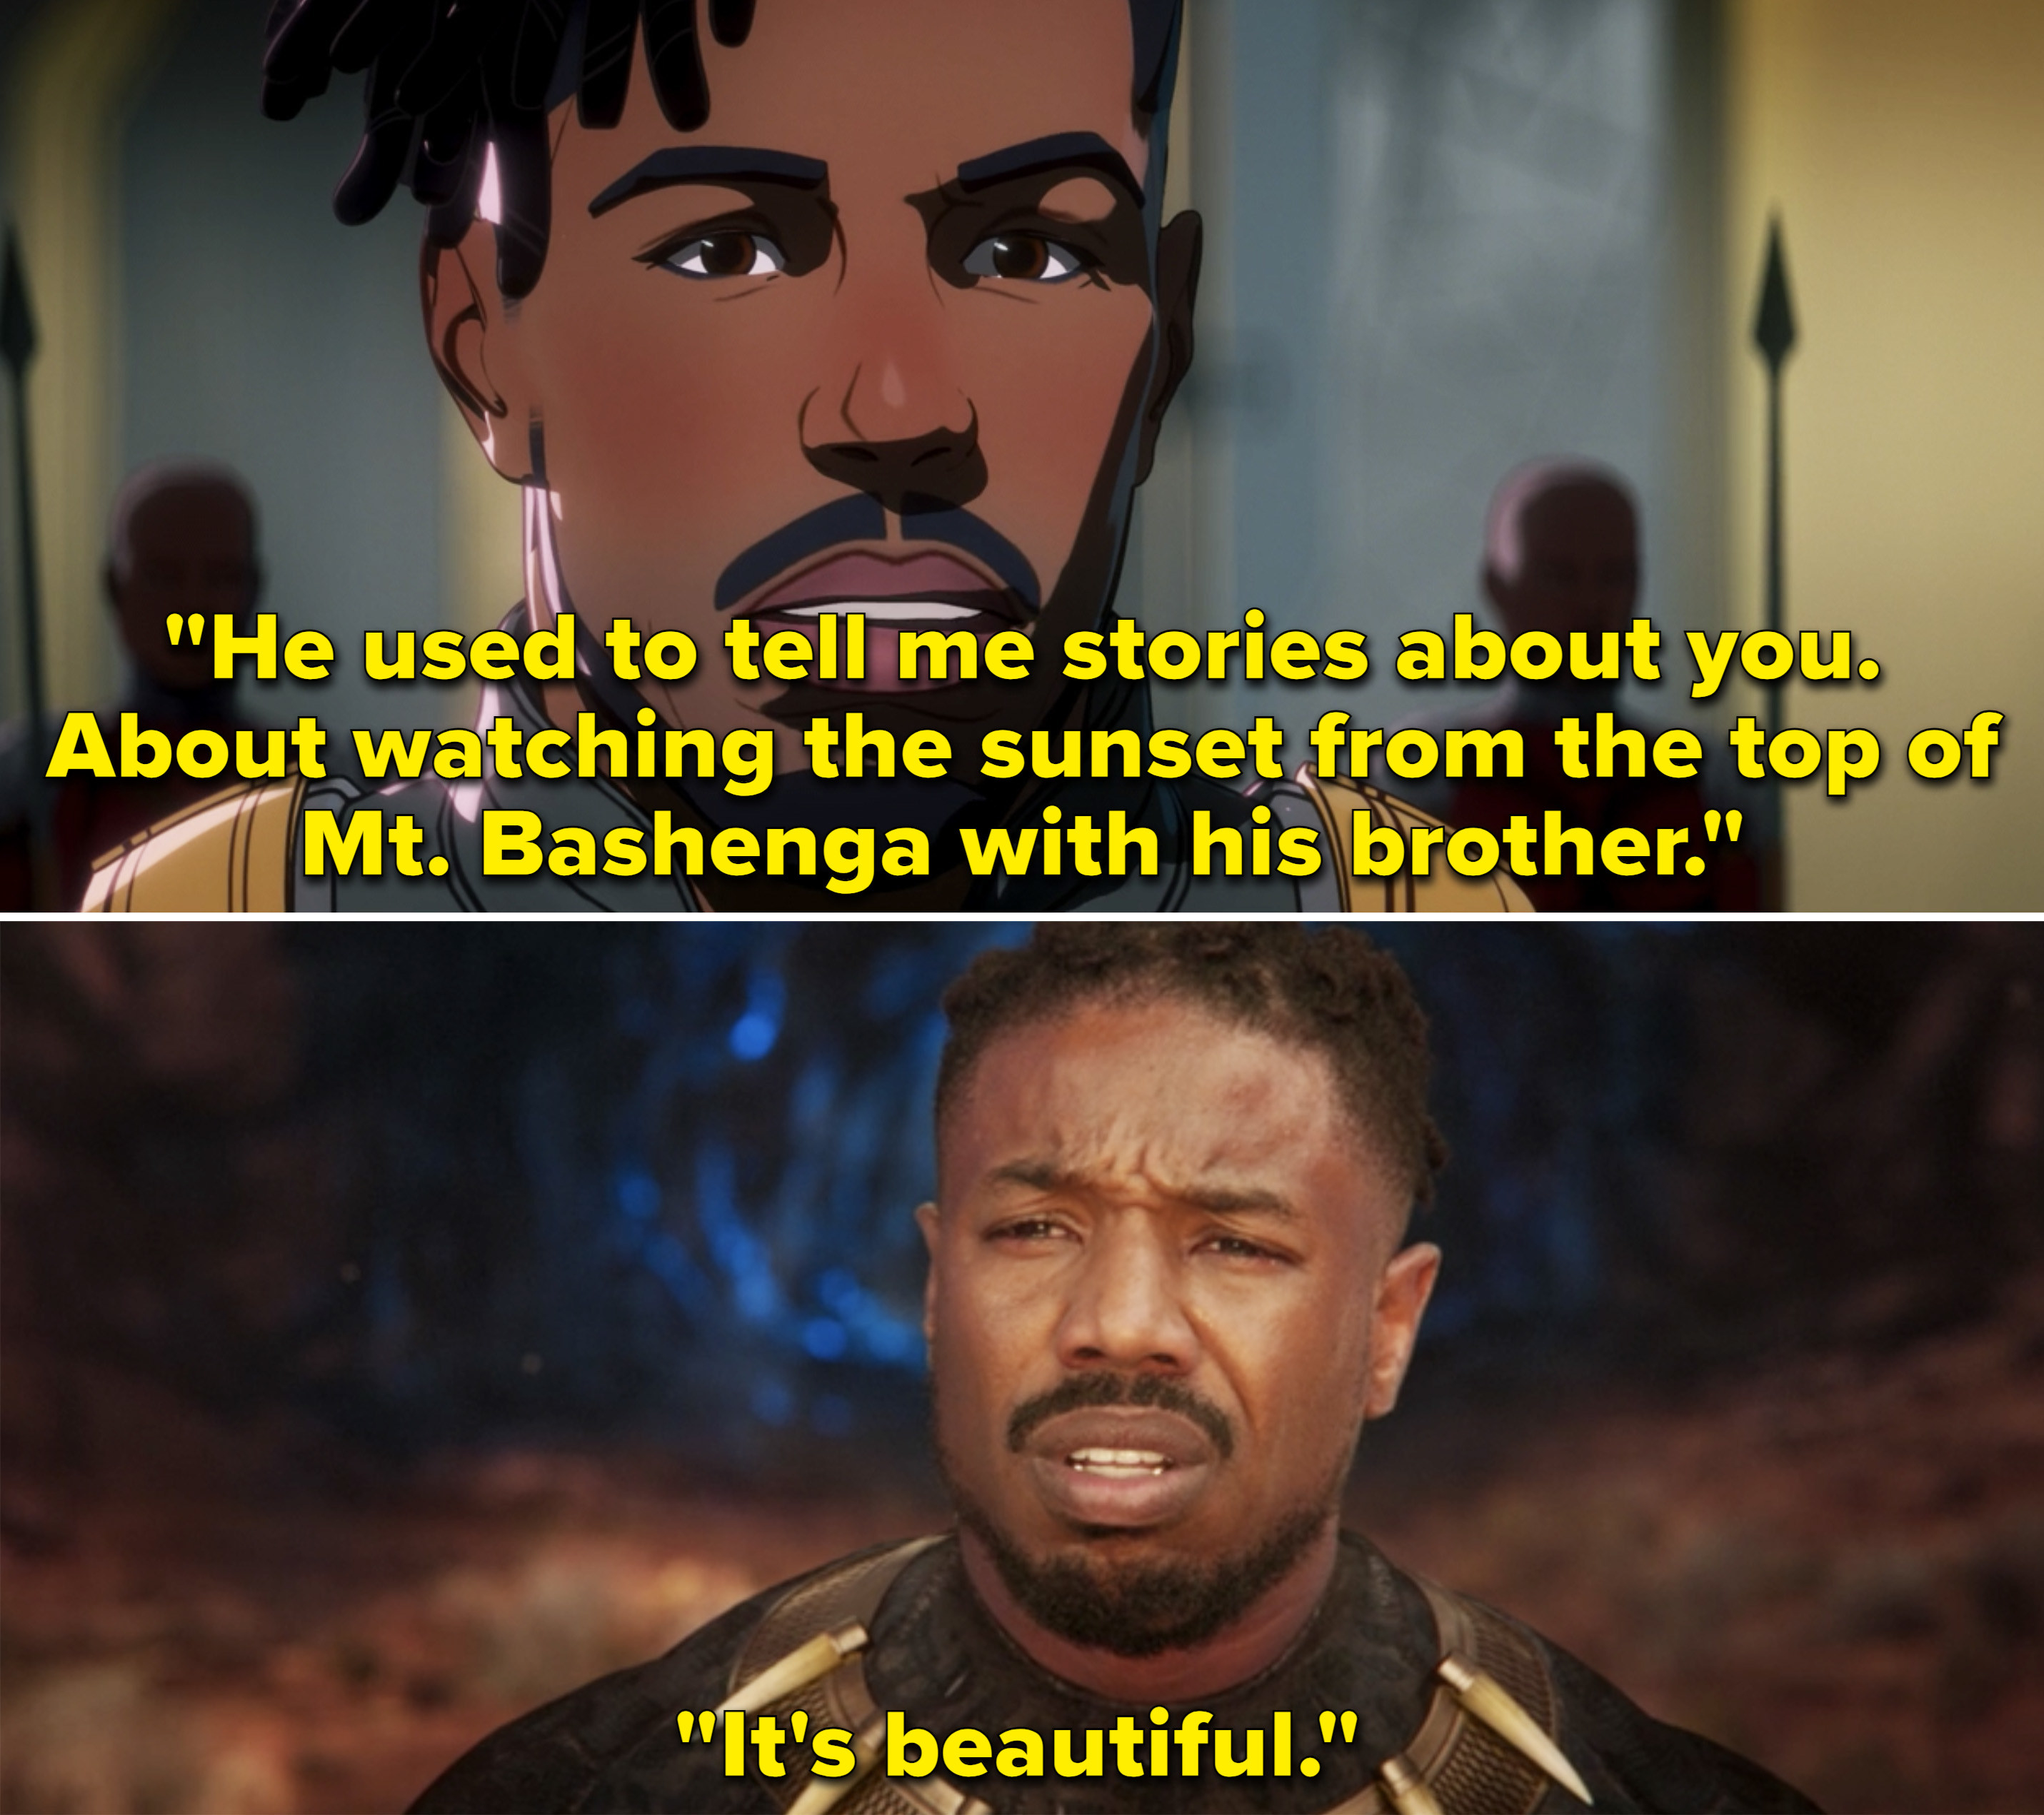 Killmonger说,“他告诉我关于你的故事。从顶部看夕阳的太Bashenga brother"